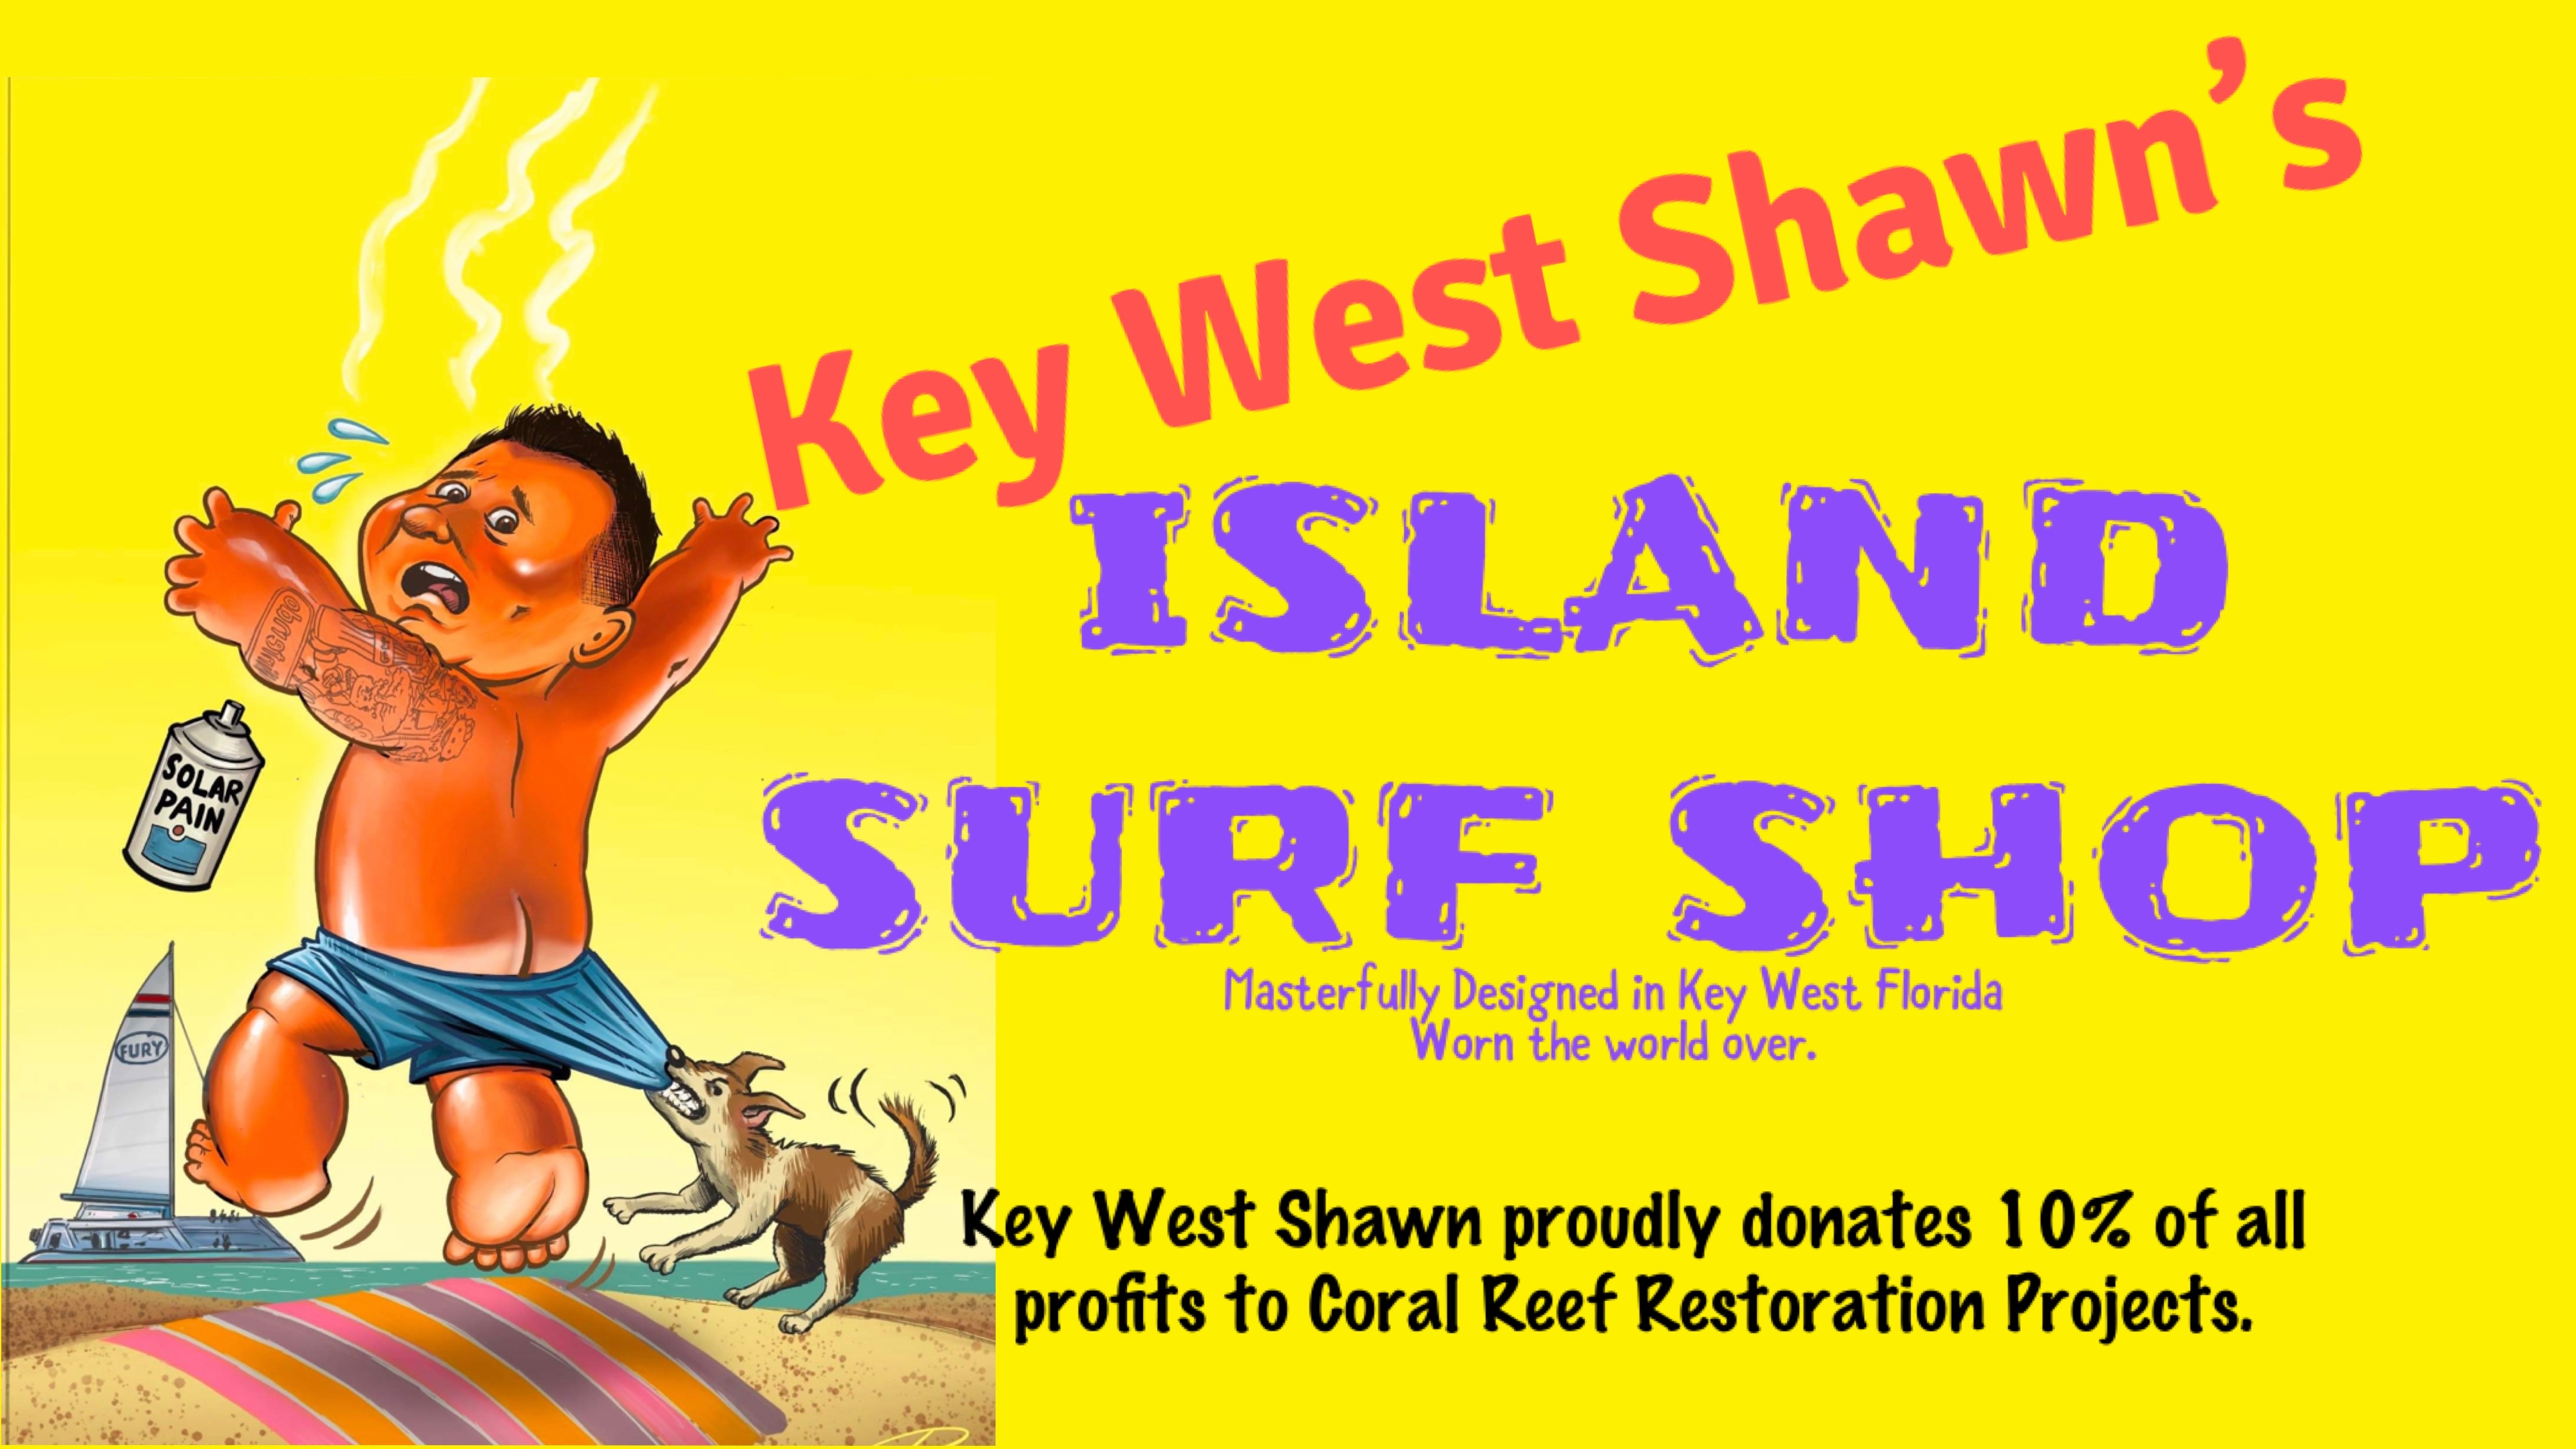 Key West Shawn’s Official Merch Shop